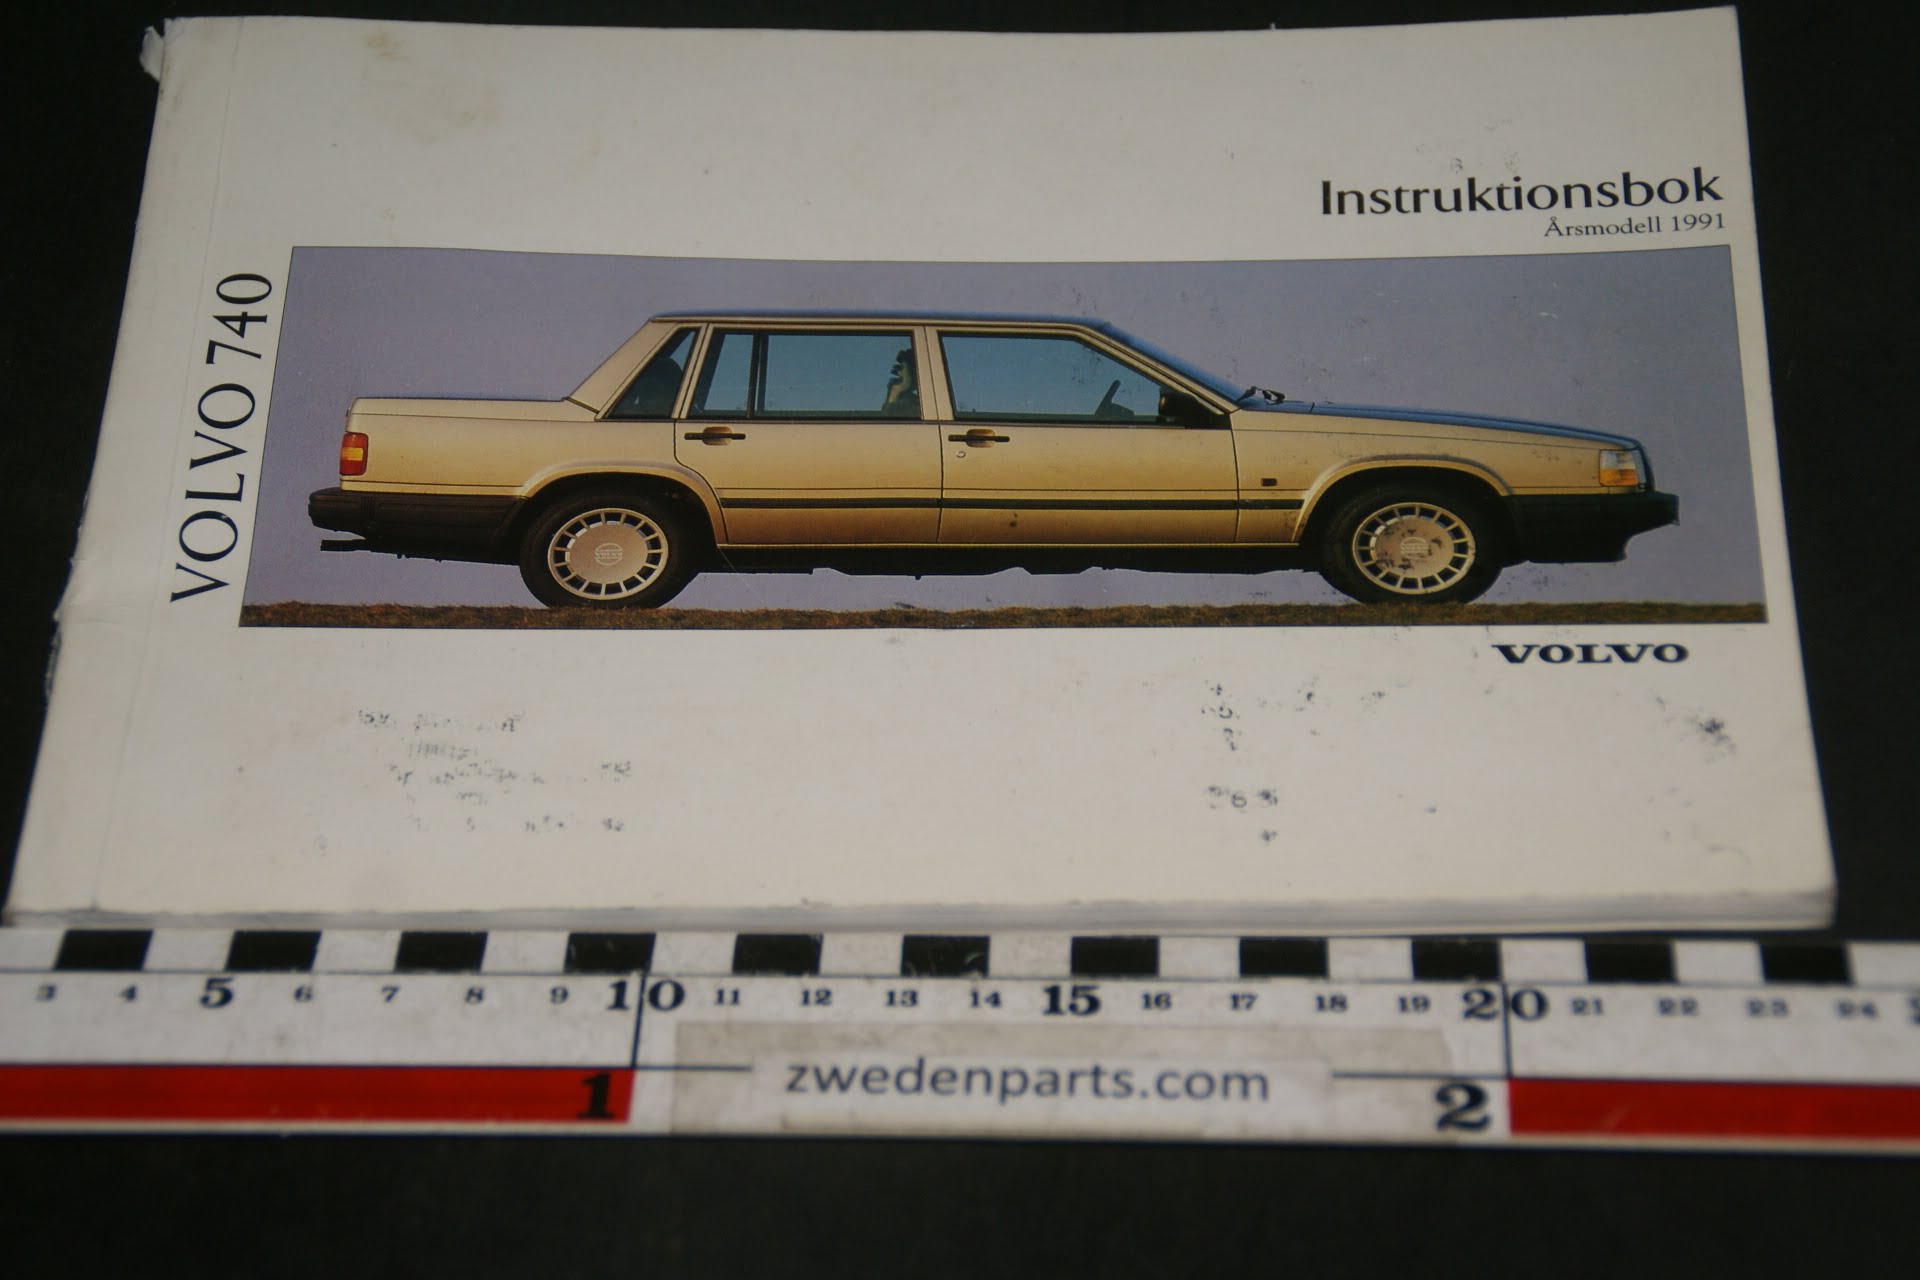 DSC07729 1991 originele instructieboekje Volvo 740 nr TP 3156-1 Svensk-70effbd4